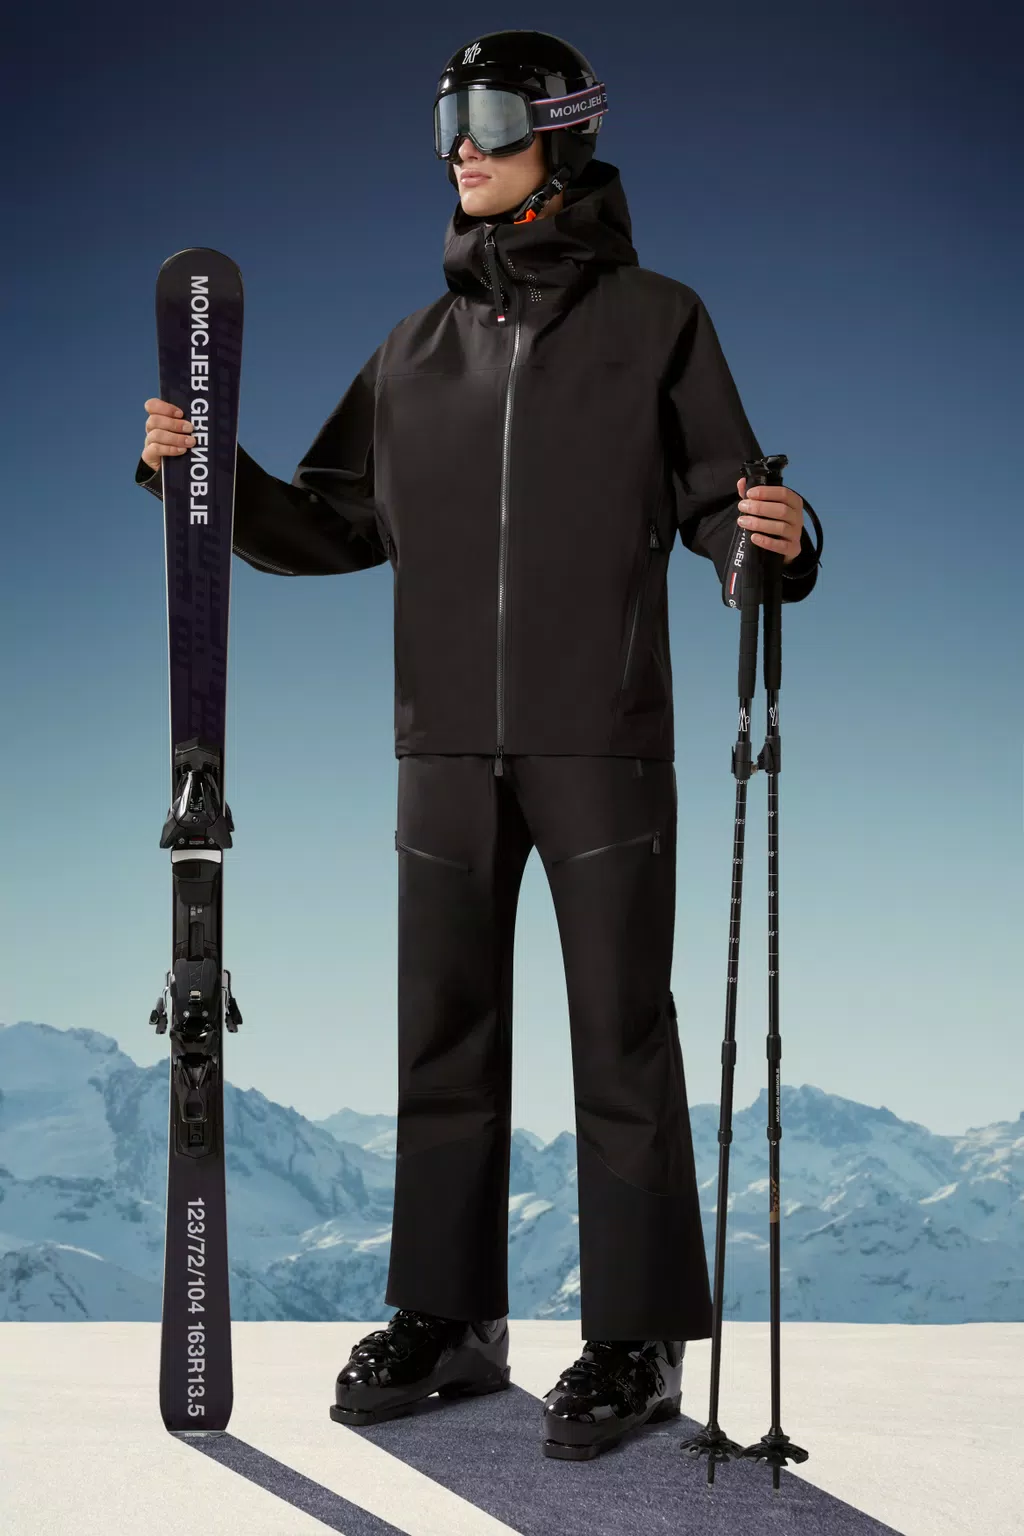 Hinterburg Ski-Jacke Herren Schwarz Moncler 1